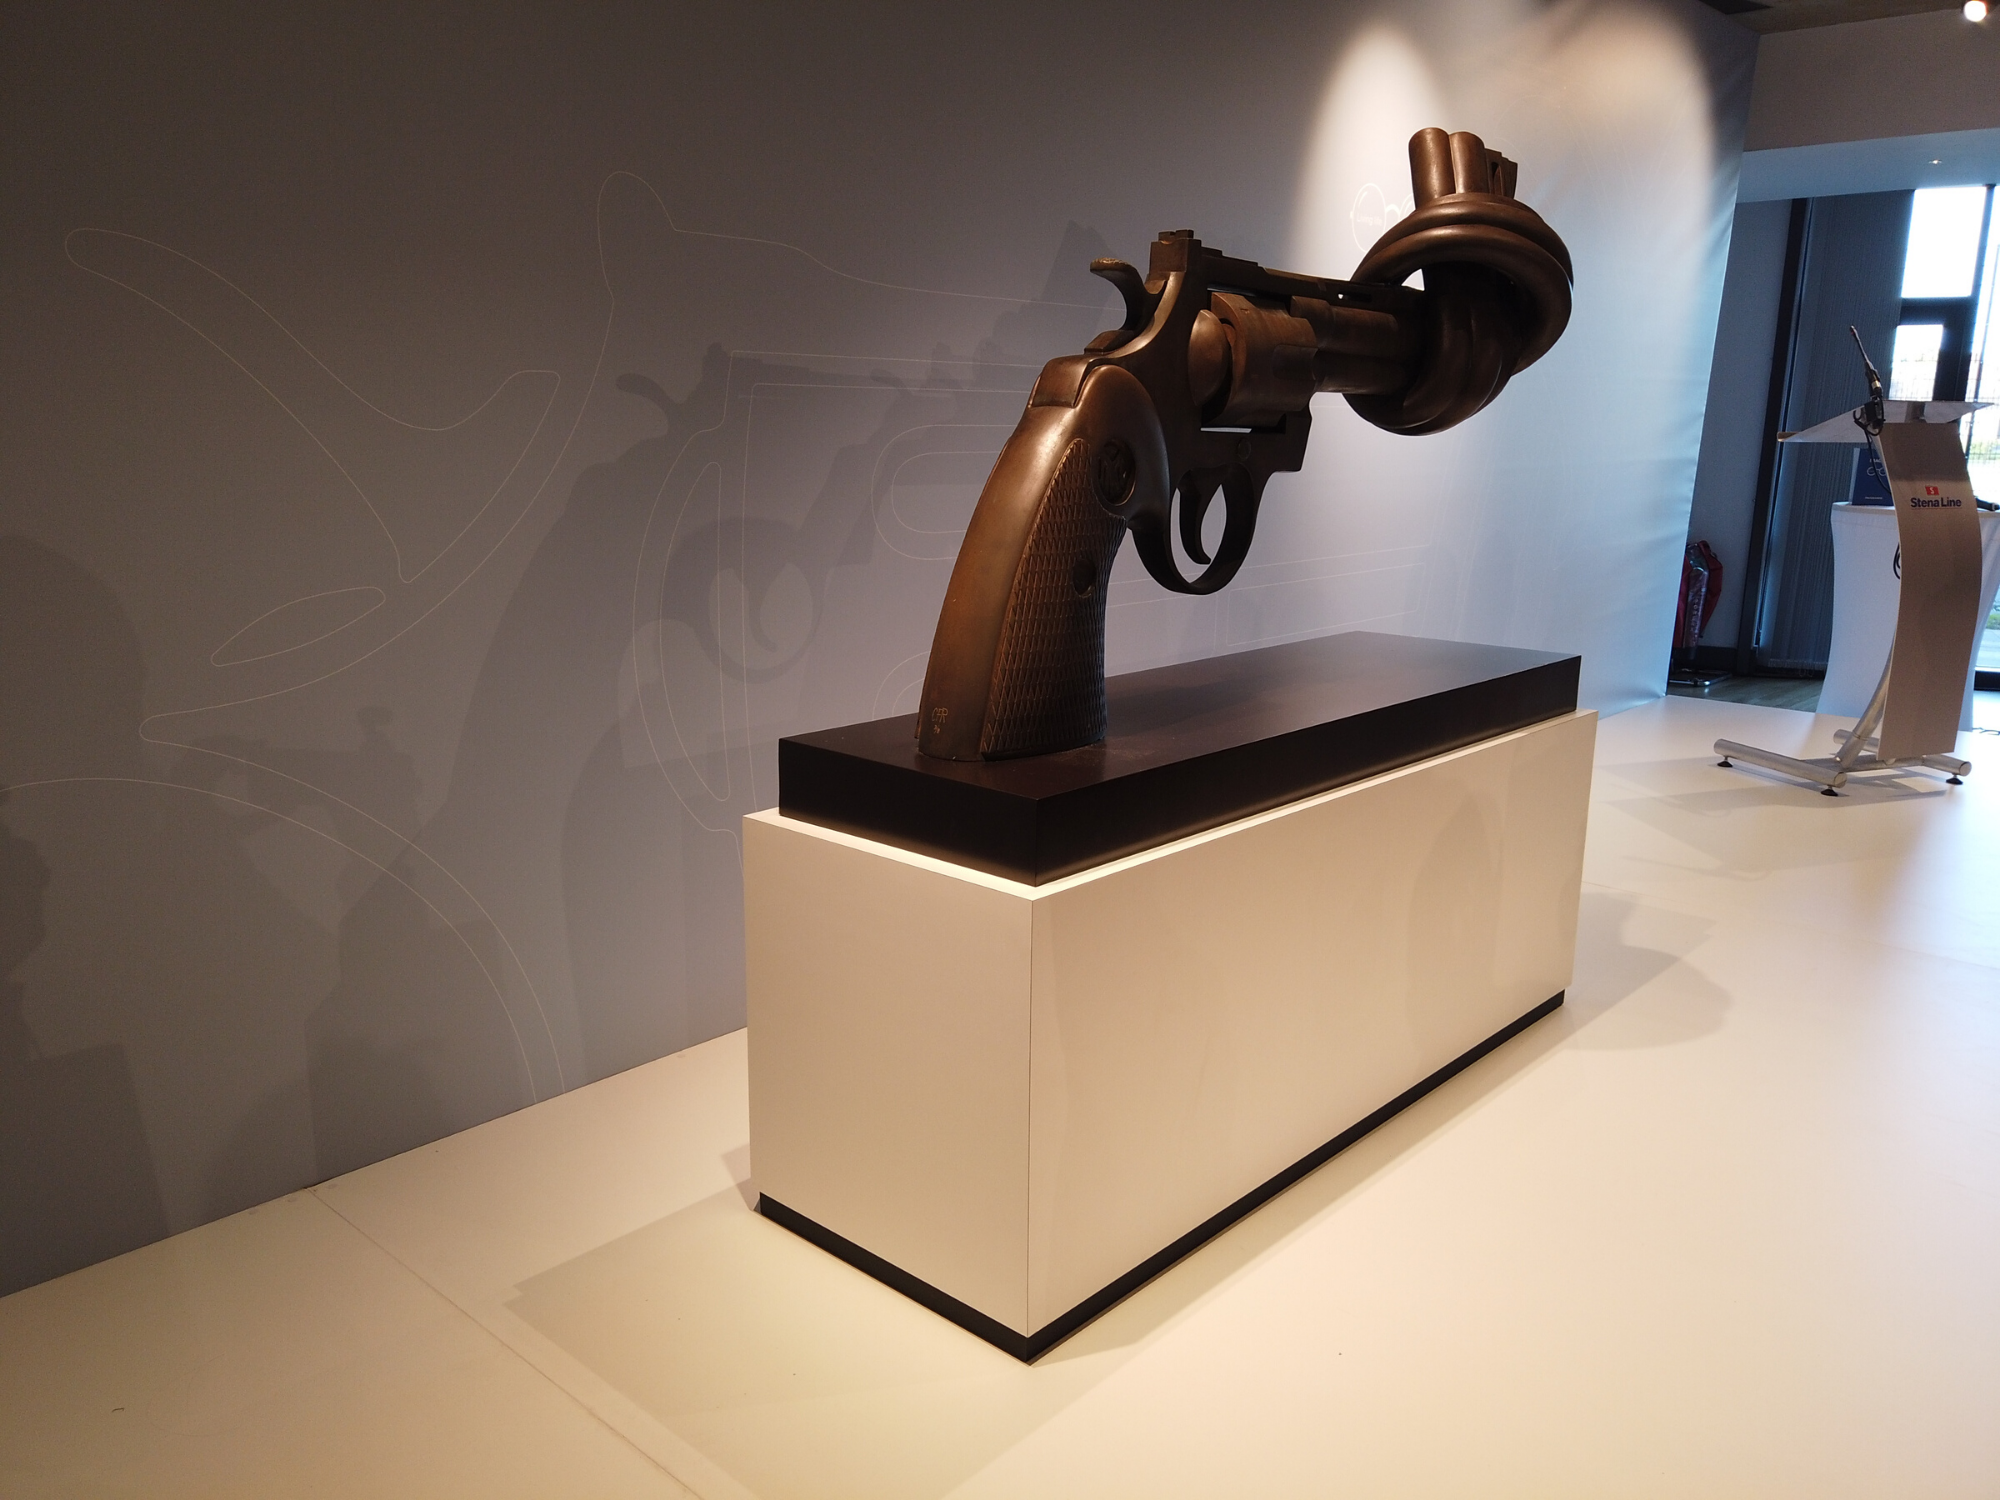 The Knotted Gun sculpture 